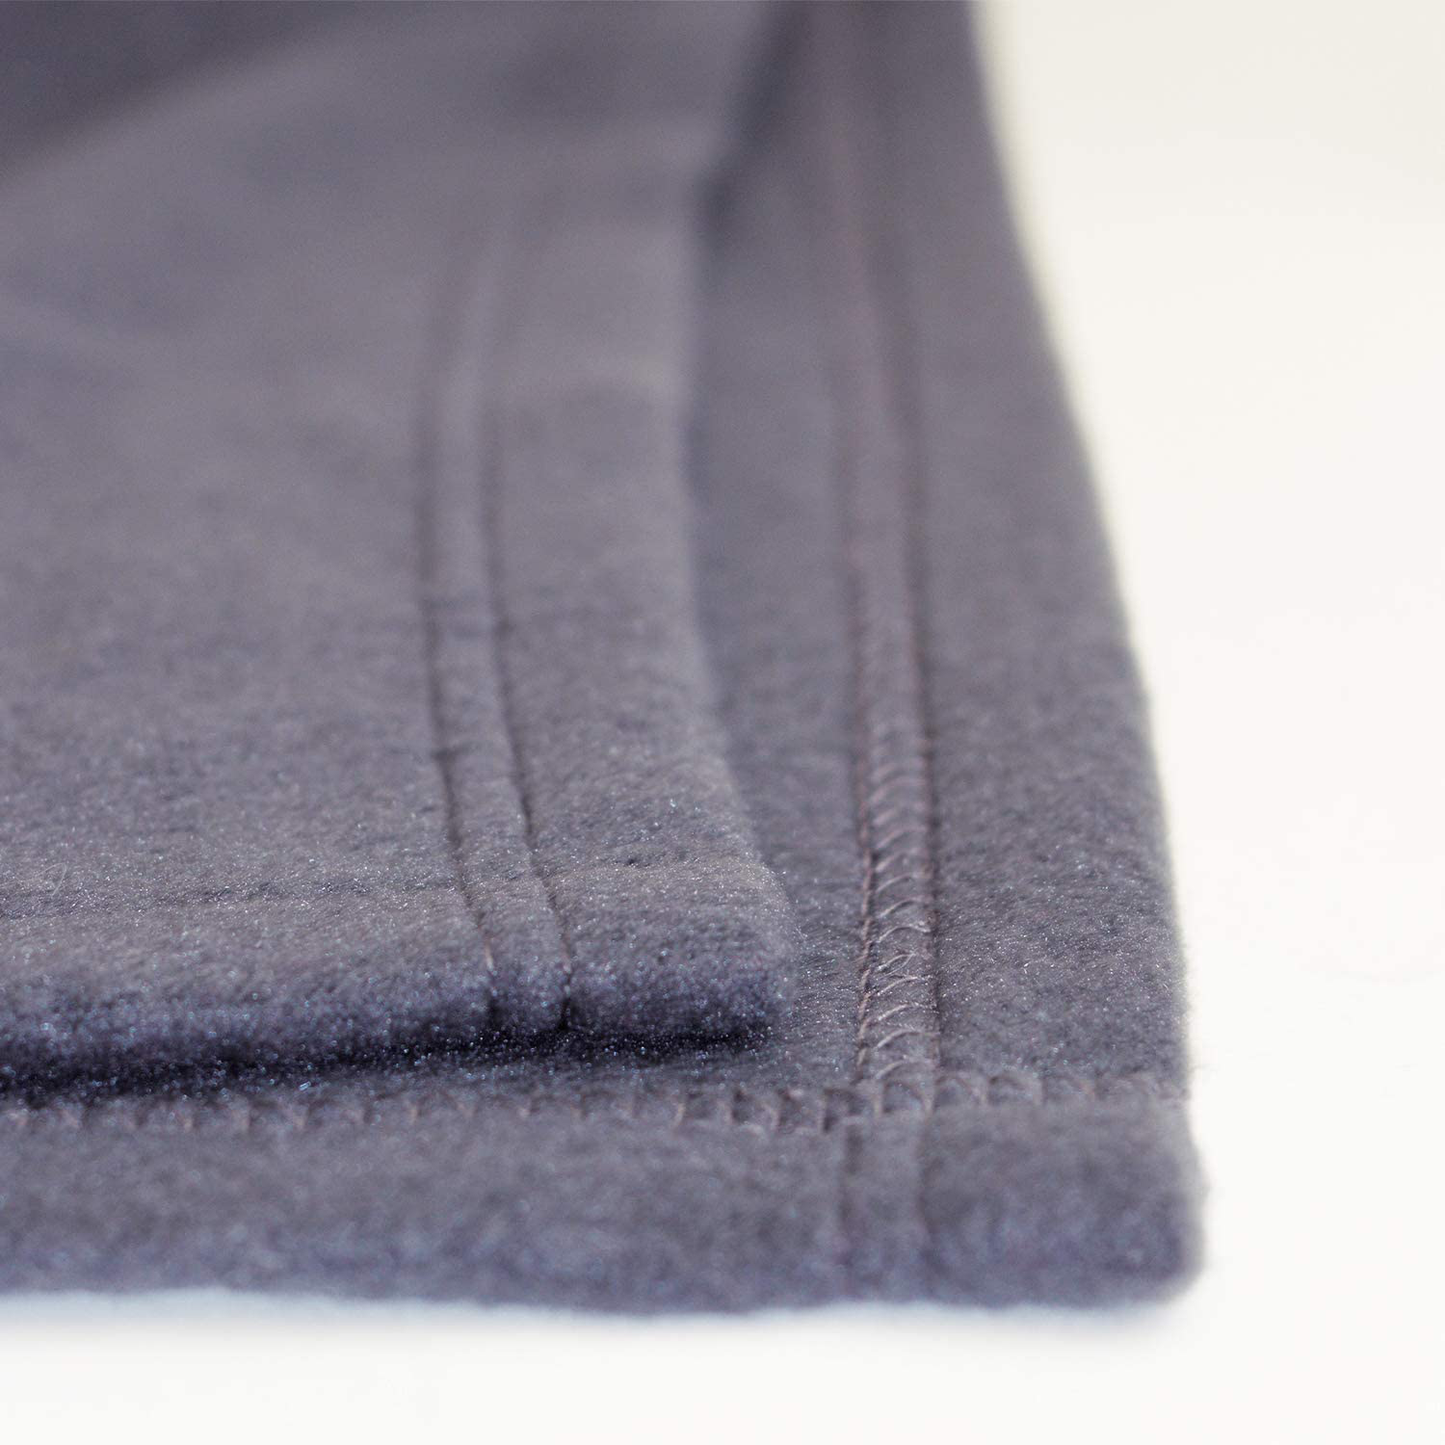 World'S Best Cozy-Soft Microfleece Travel Blanket, 50 X 60 Inch, Charcoal